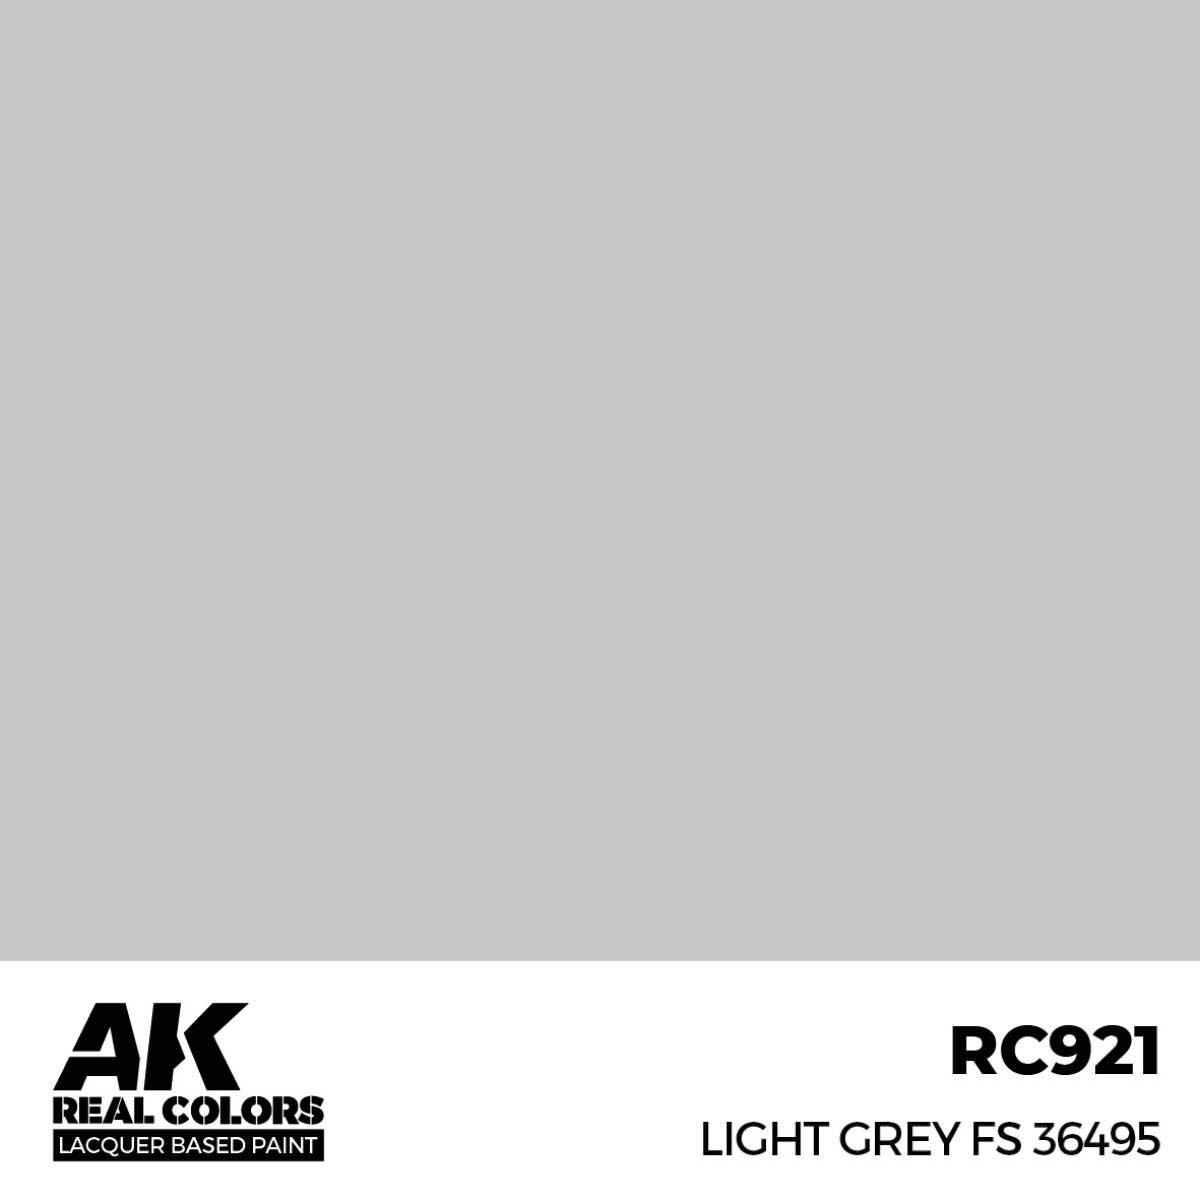 Light Grey FS 36495